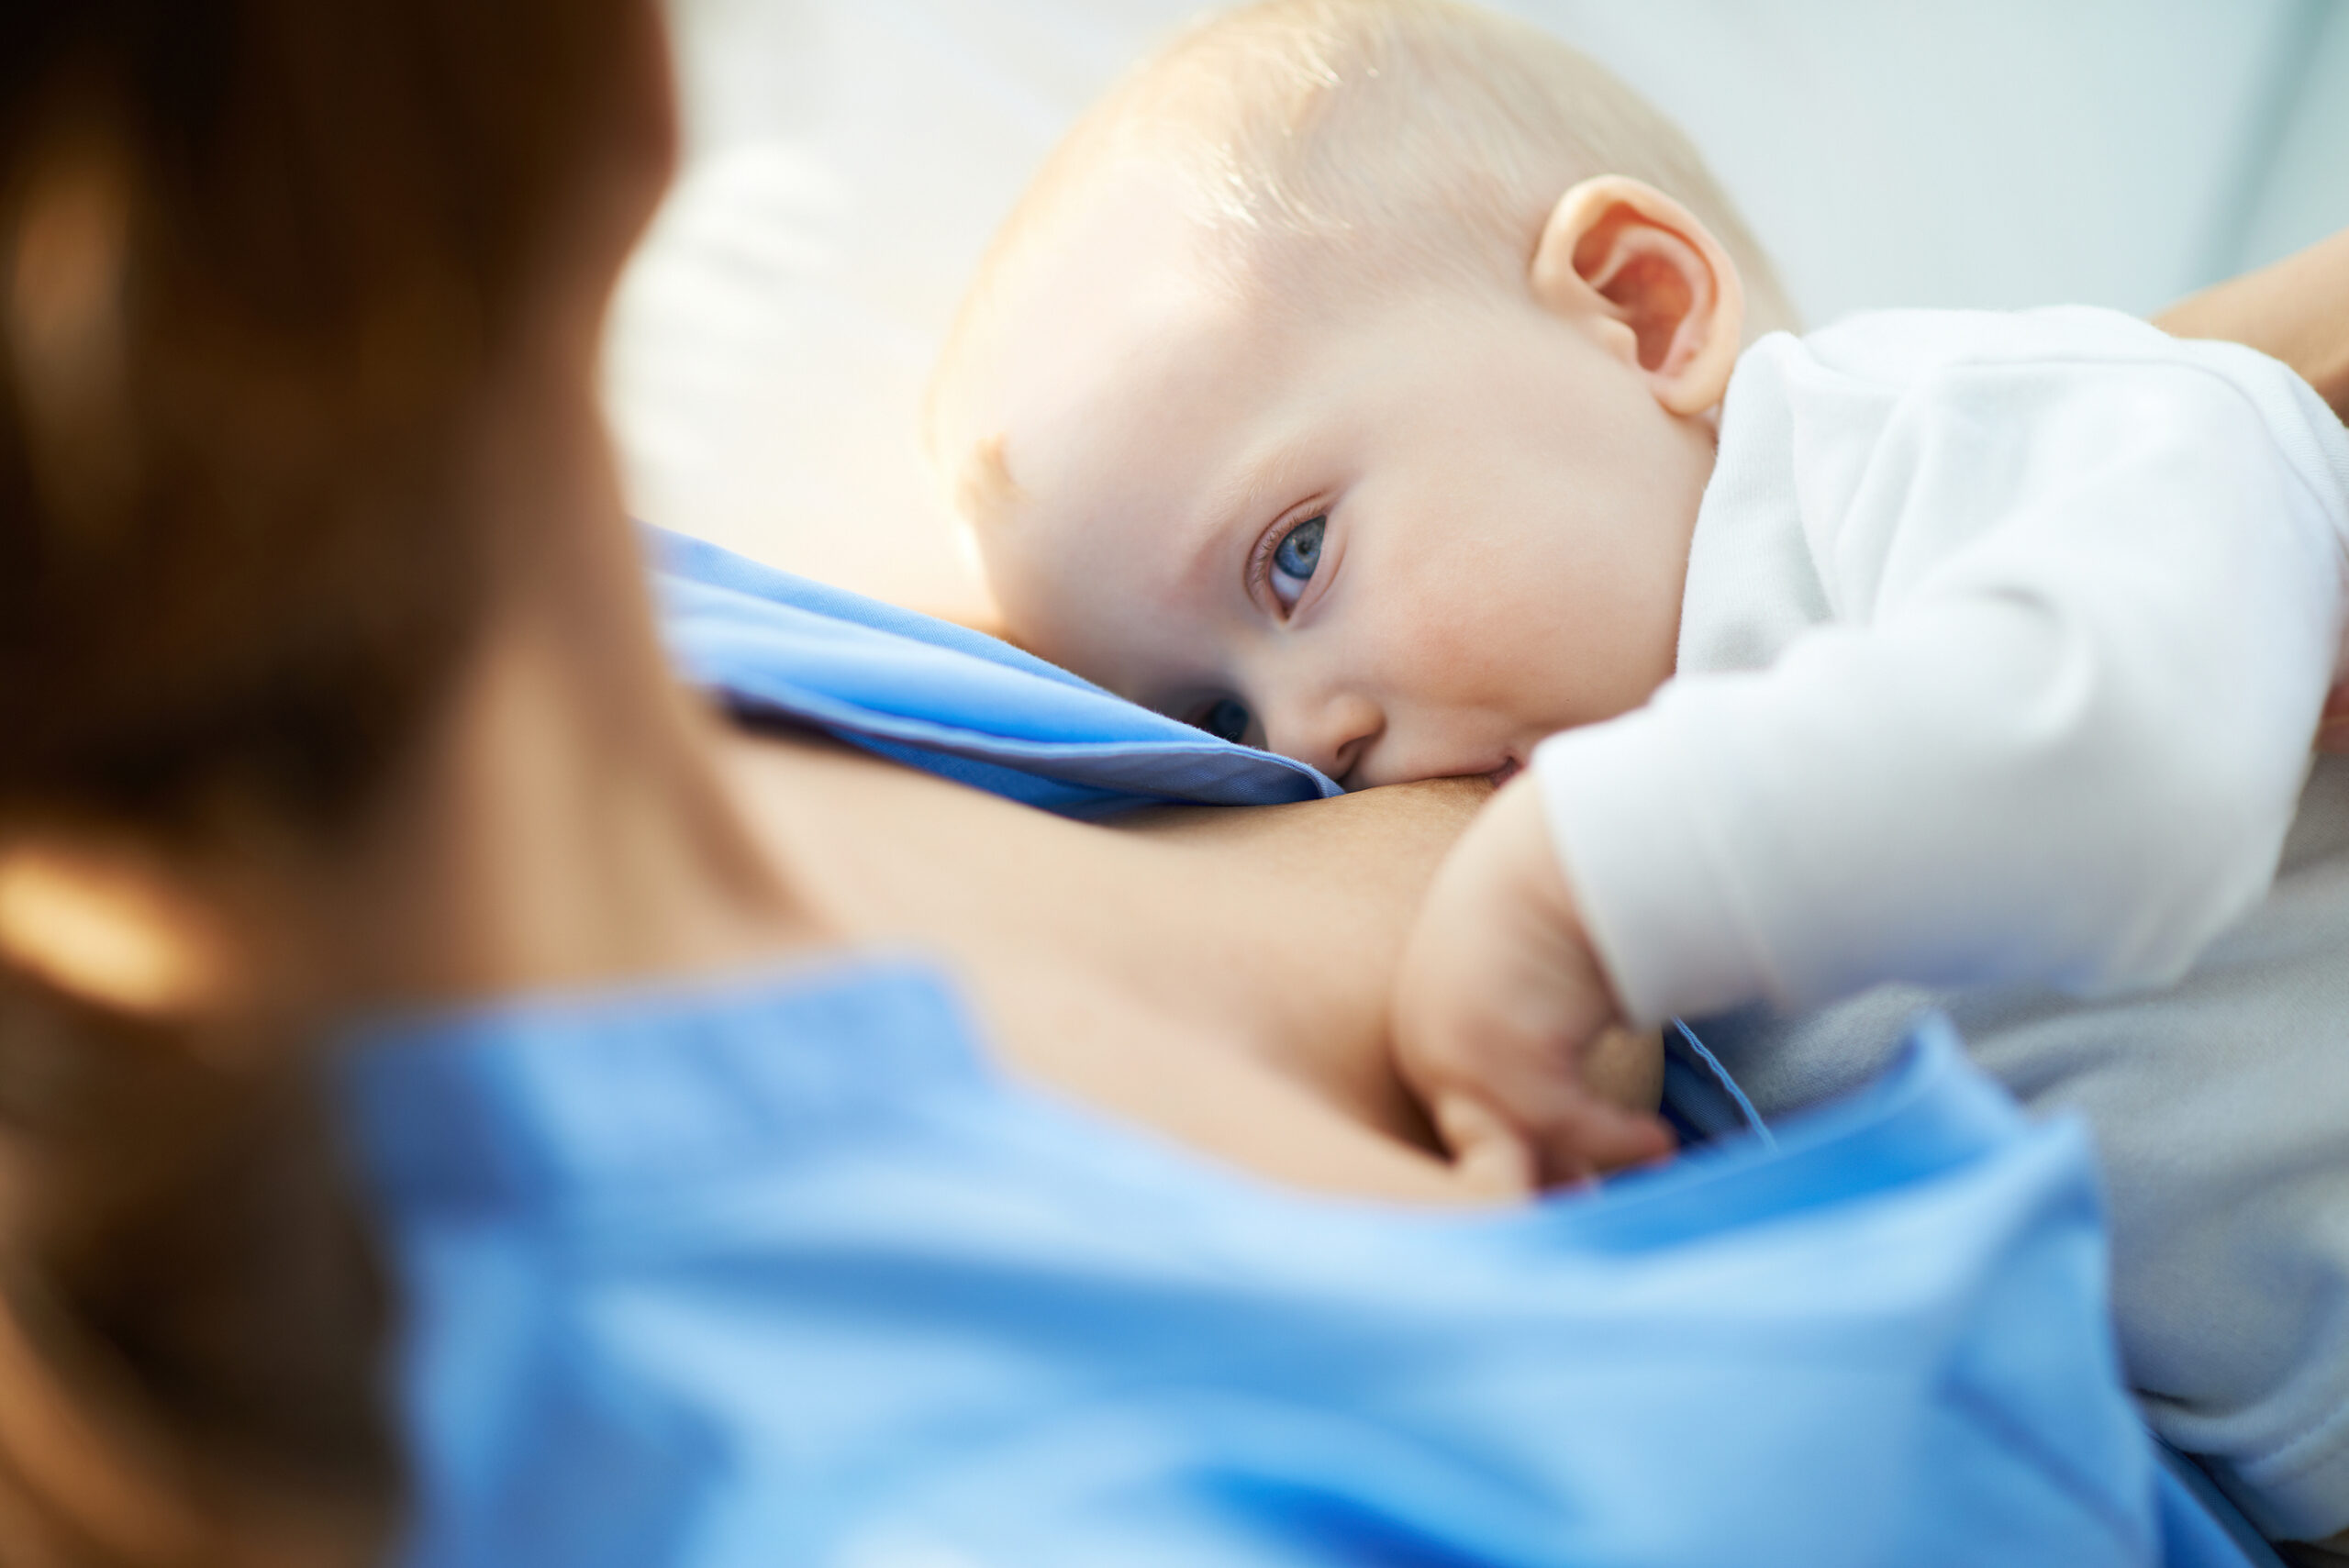 Breastfeeding has long-term health benefits